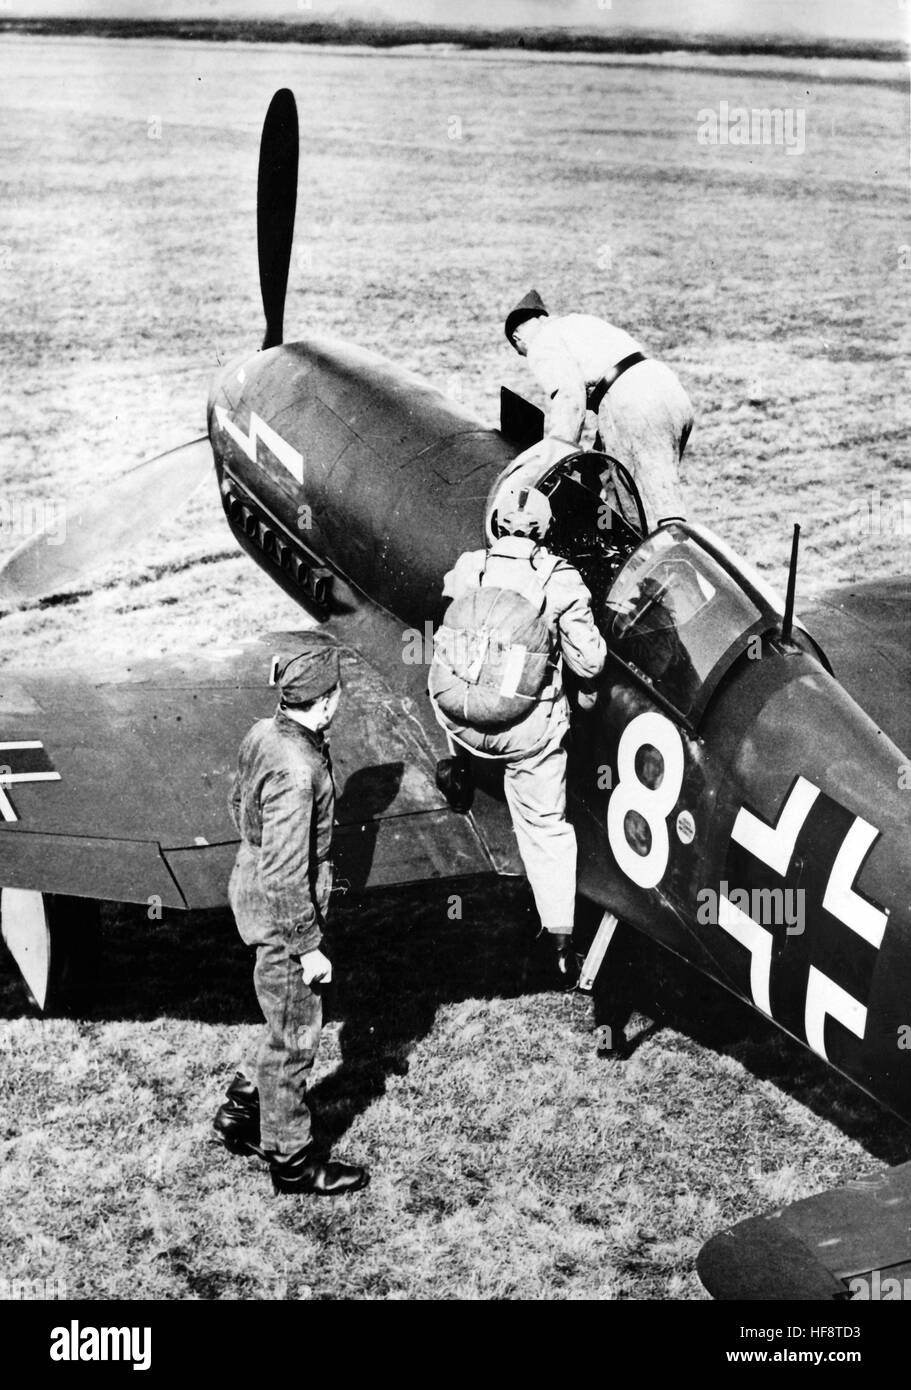 The Nazi propaganda image shows a German Luftwaffe pilot getting into a Heinkel He 113 (He 100) fighter plane. Published in July 1942. Fotoarchiv für Zeitgeschichte - NO WIRELESS SERVICE - | usage worldwide Stock Photo